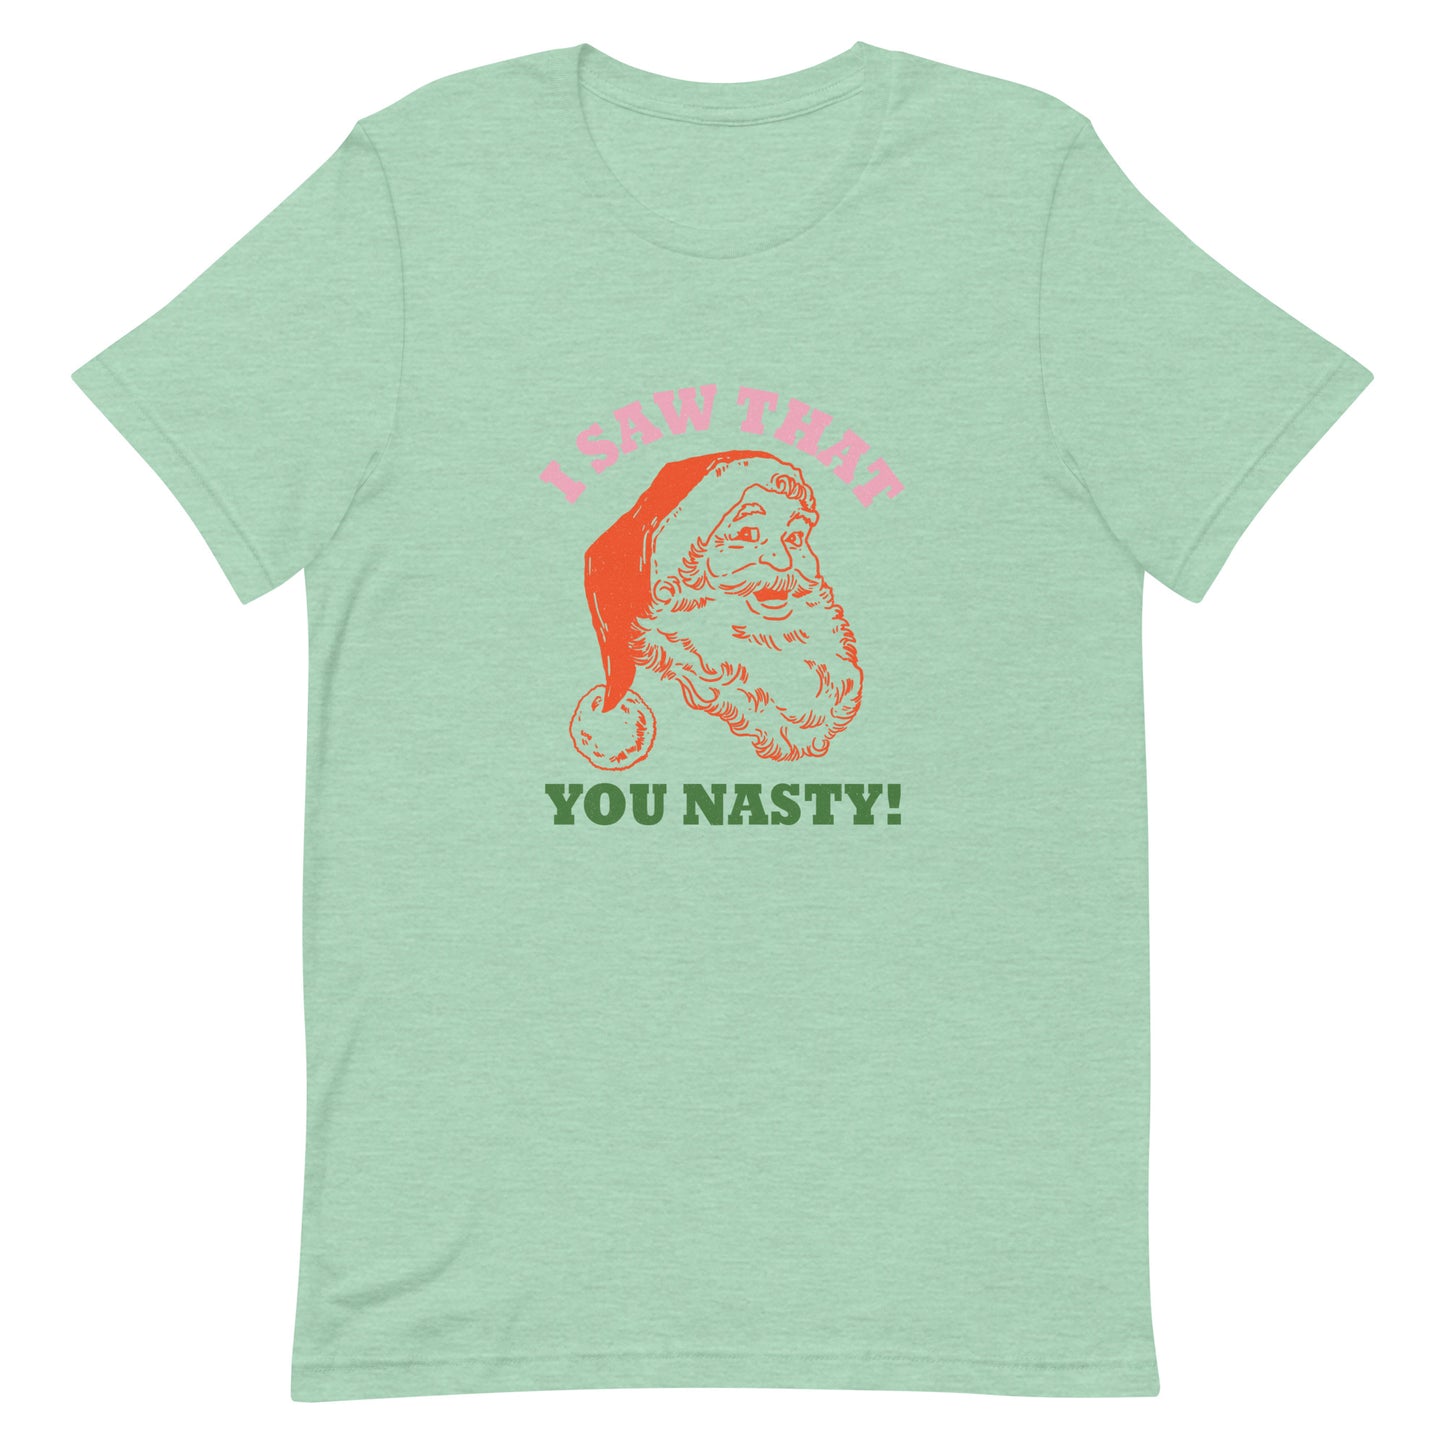 I Saw That You Nasty Unisex t-shirt